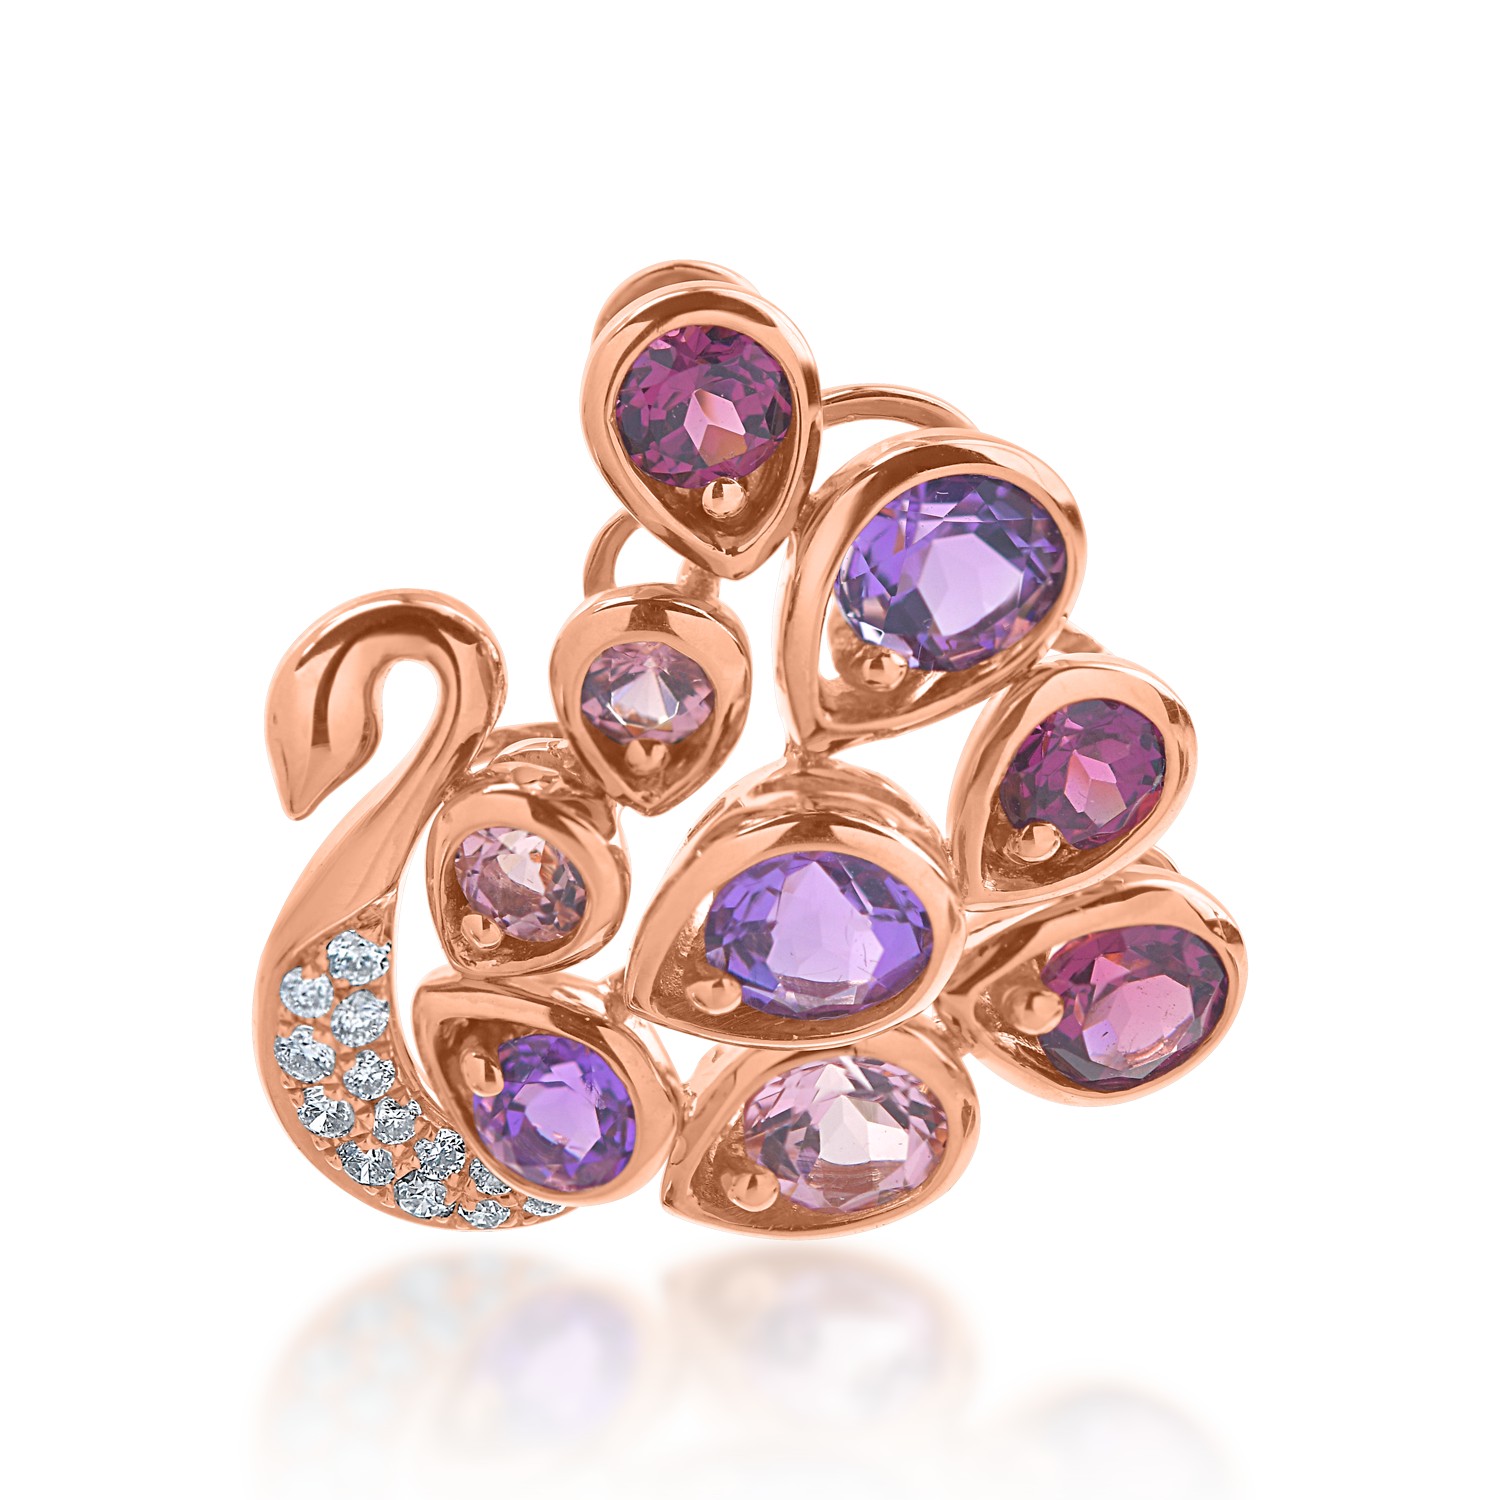 Rose gold peacock pendant with 1.67ct semi-precious stones